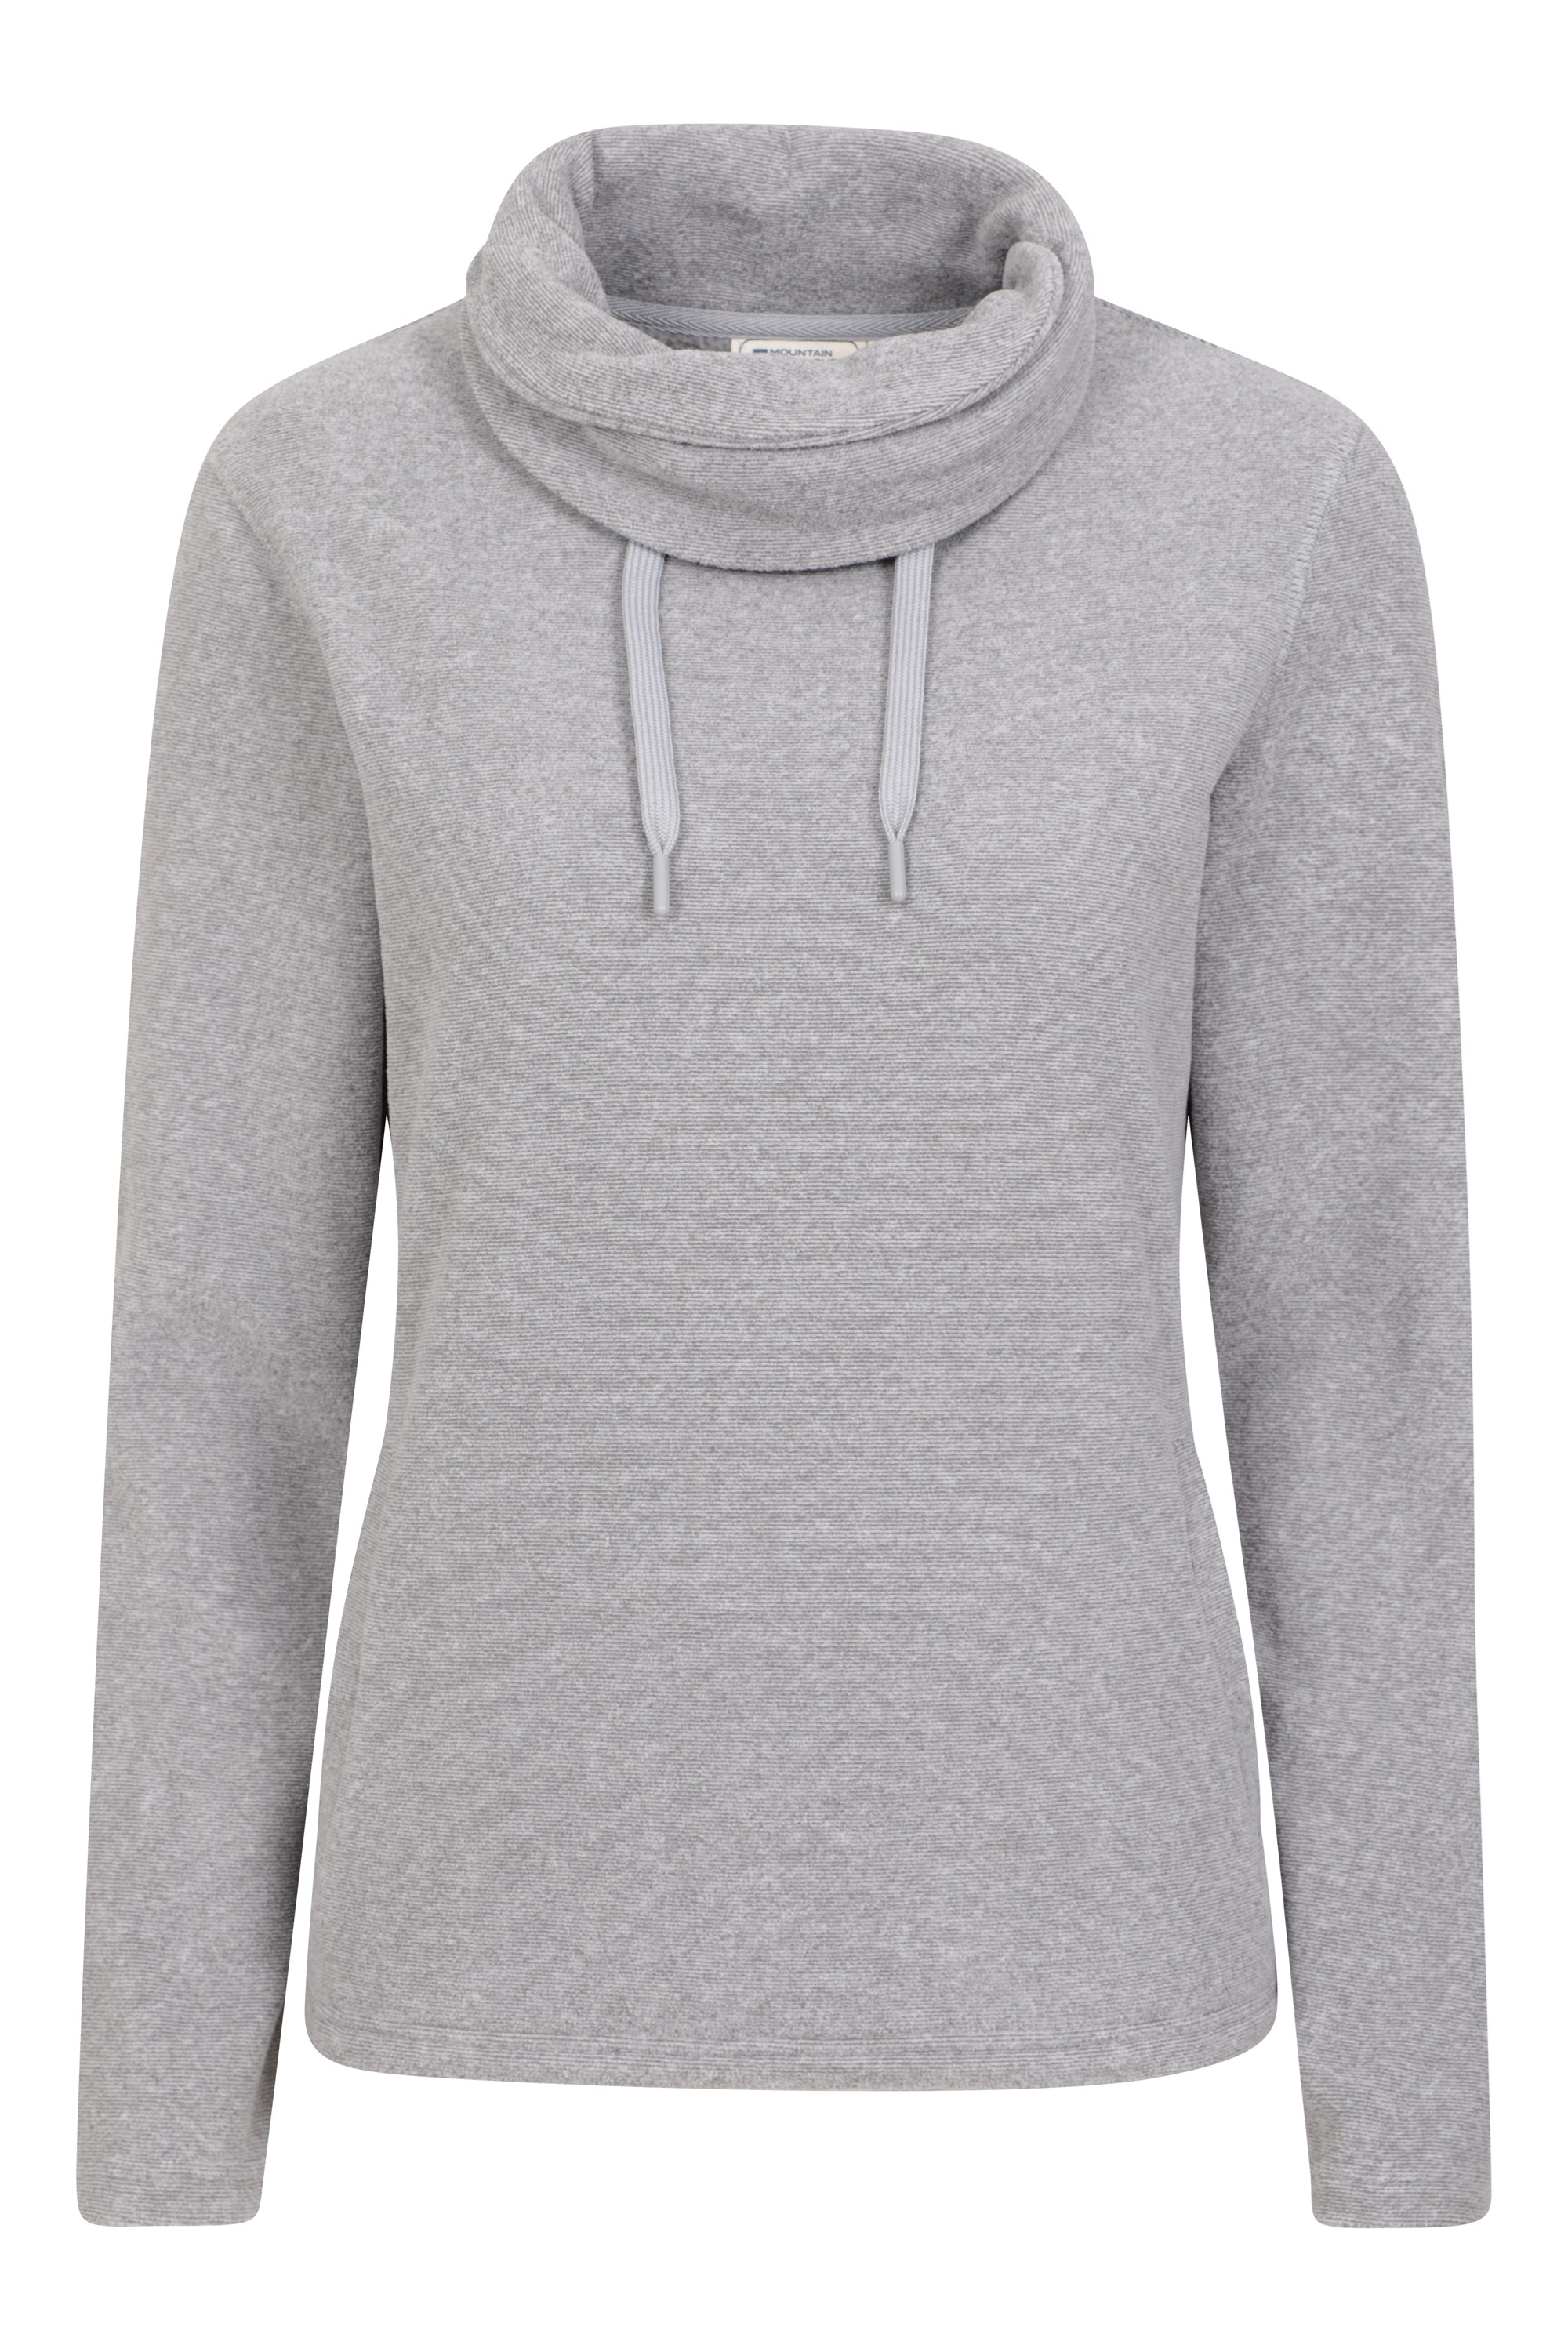 Avalanche Outdoor Supply Co, Cowl-Neck Grey Sweatshirt, Size